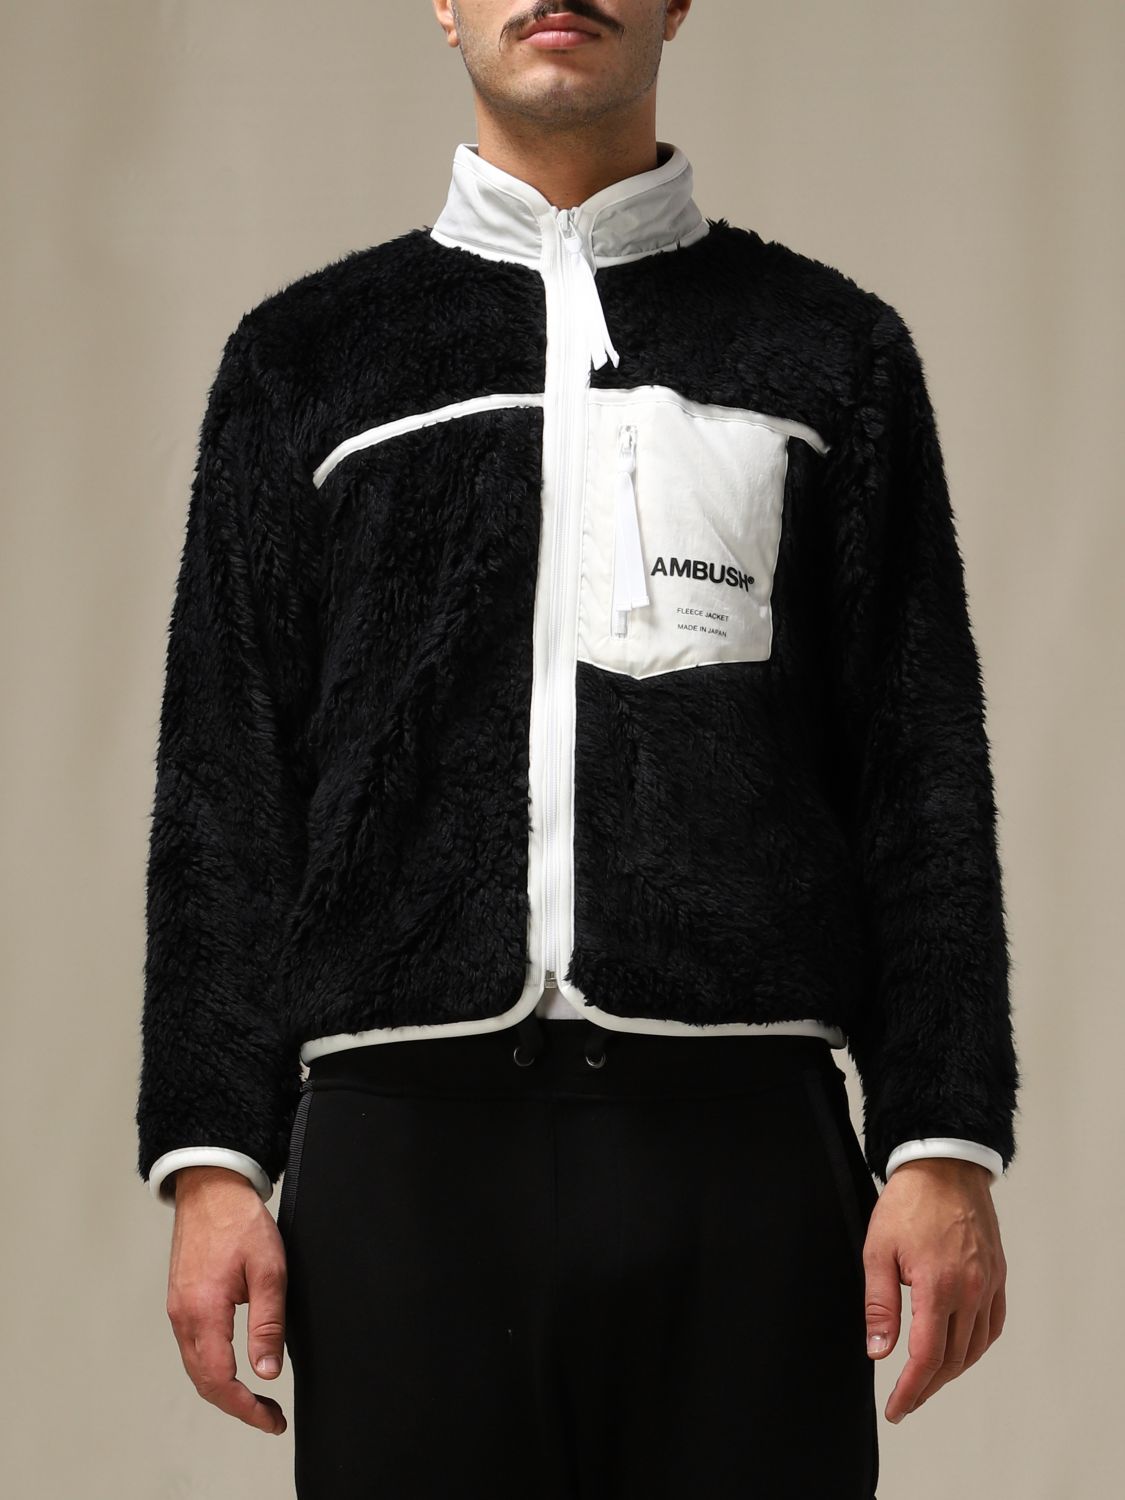 Ambush Outlet: bi-material zip jacket with logo - Black | Ambush jacket ...